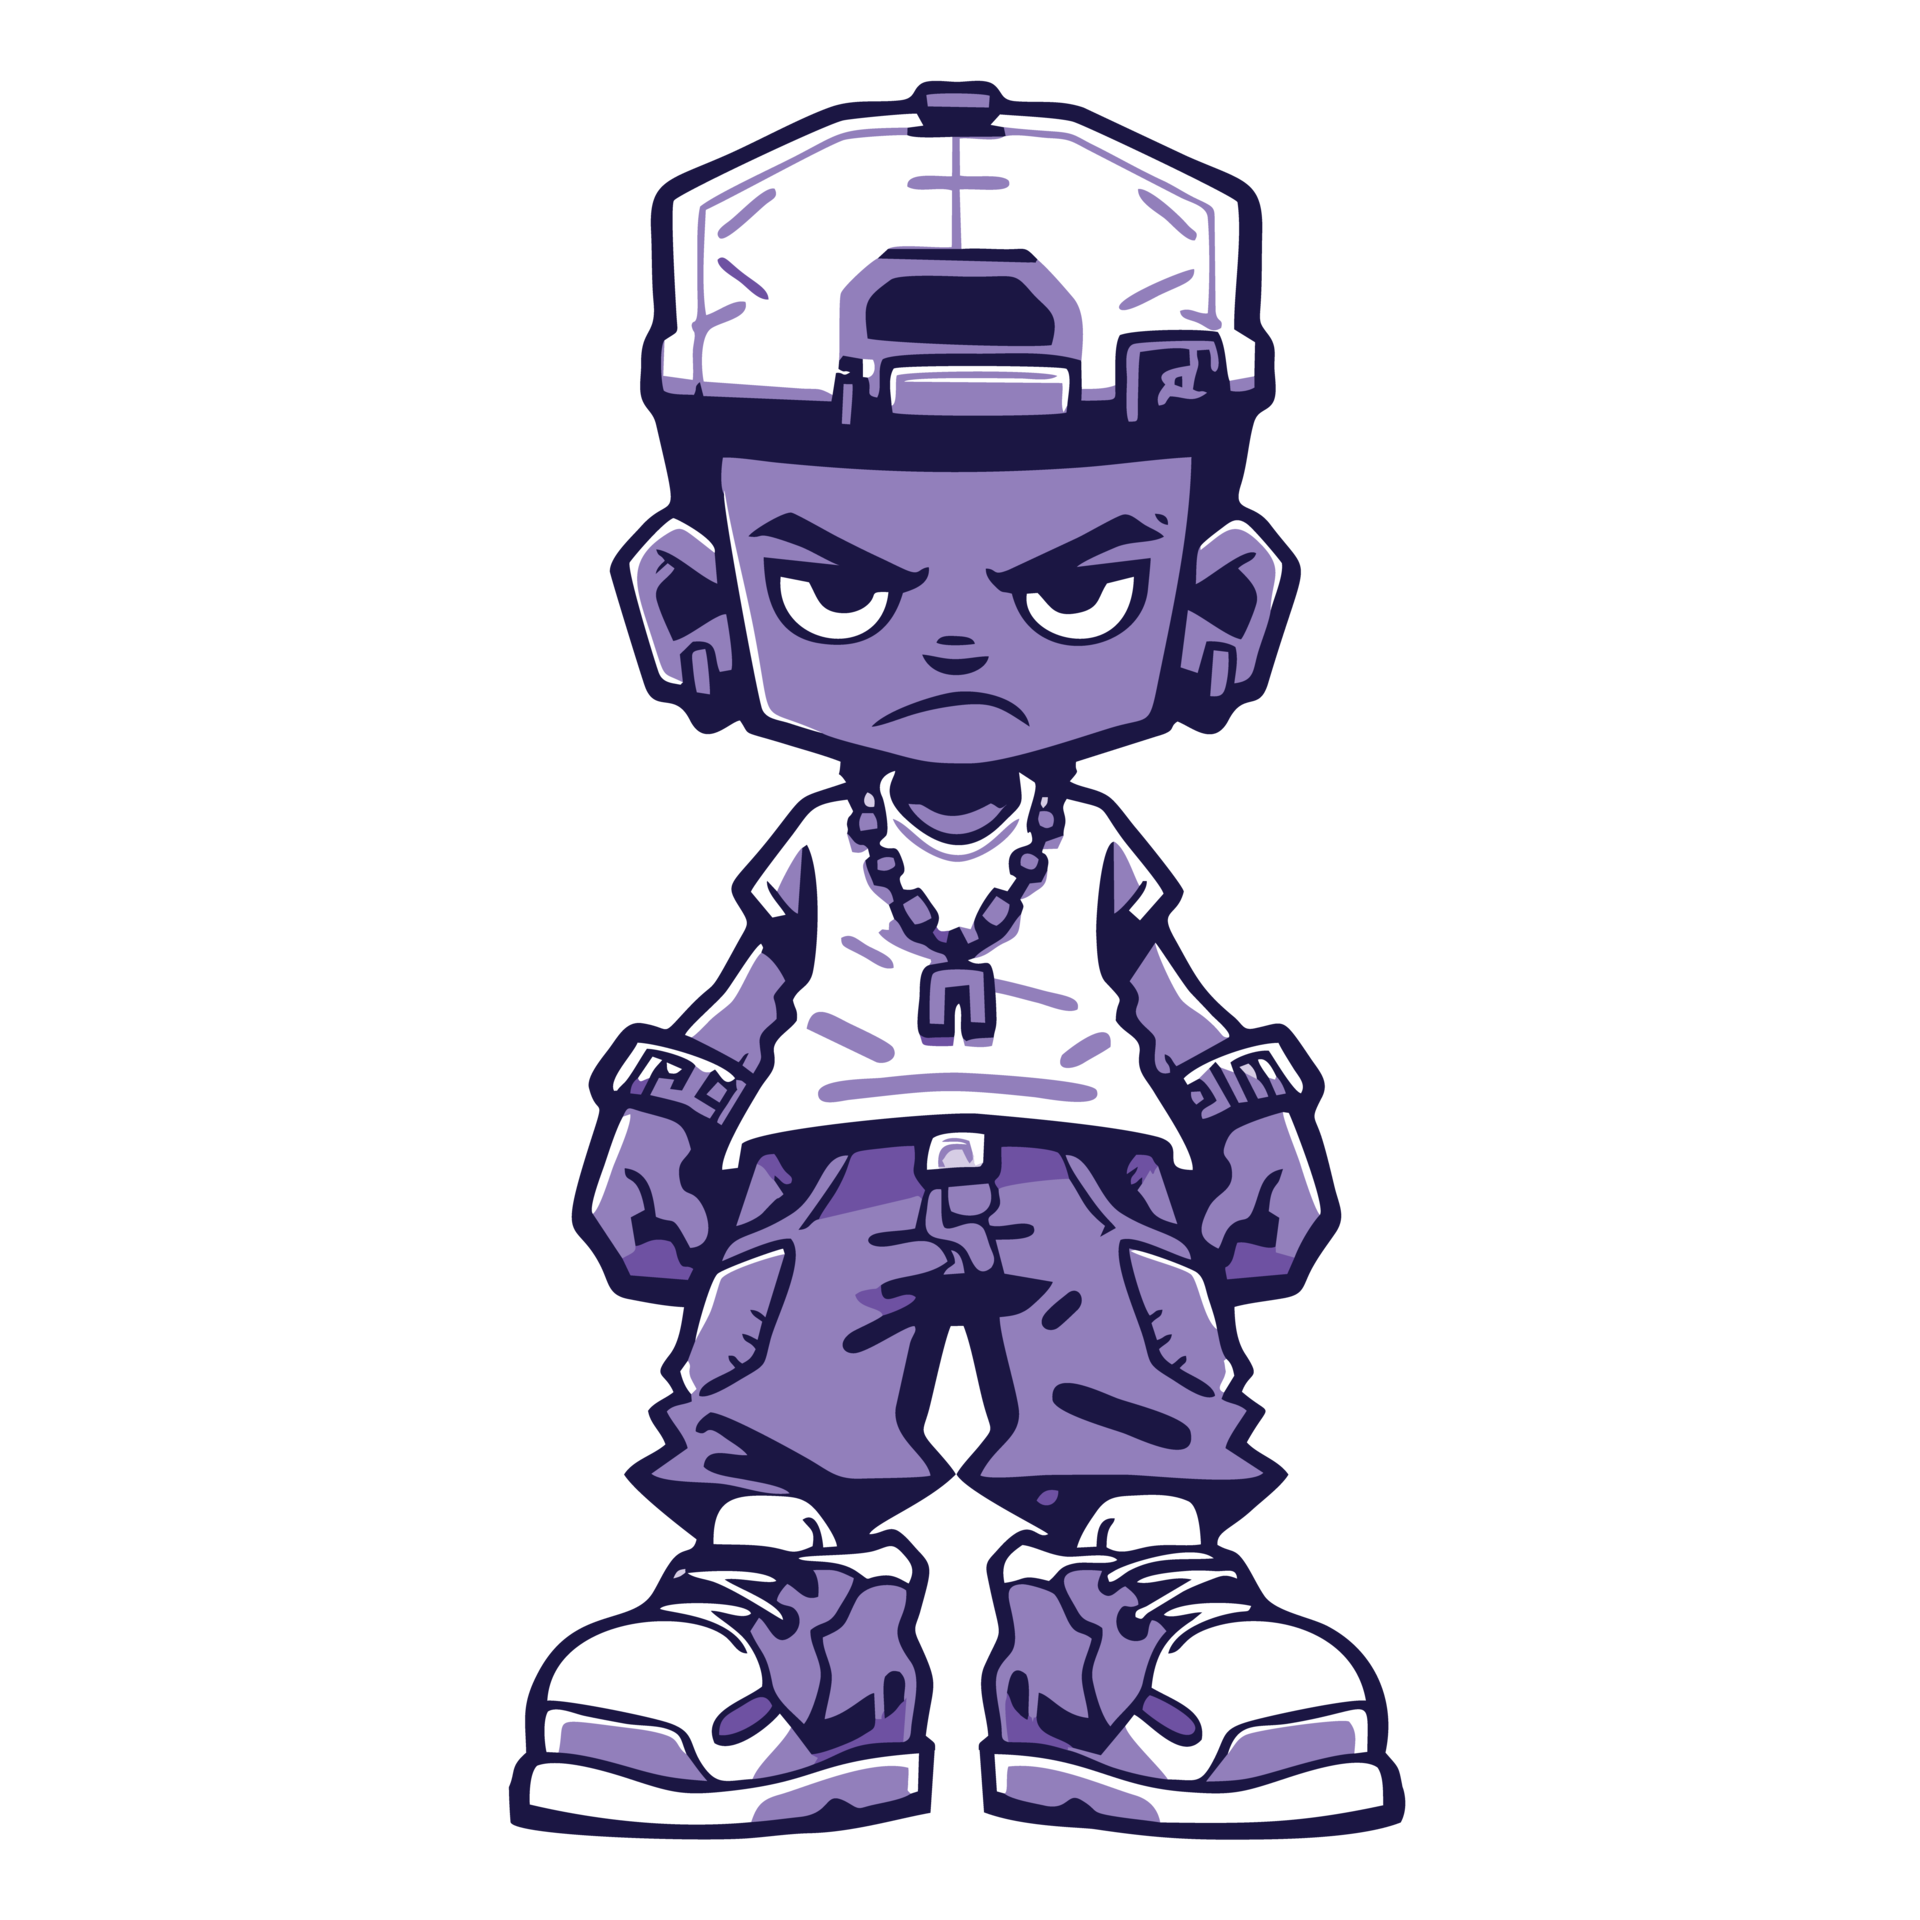 Premium AI Image  Hip Hop character